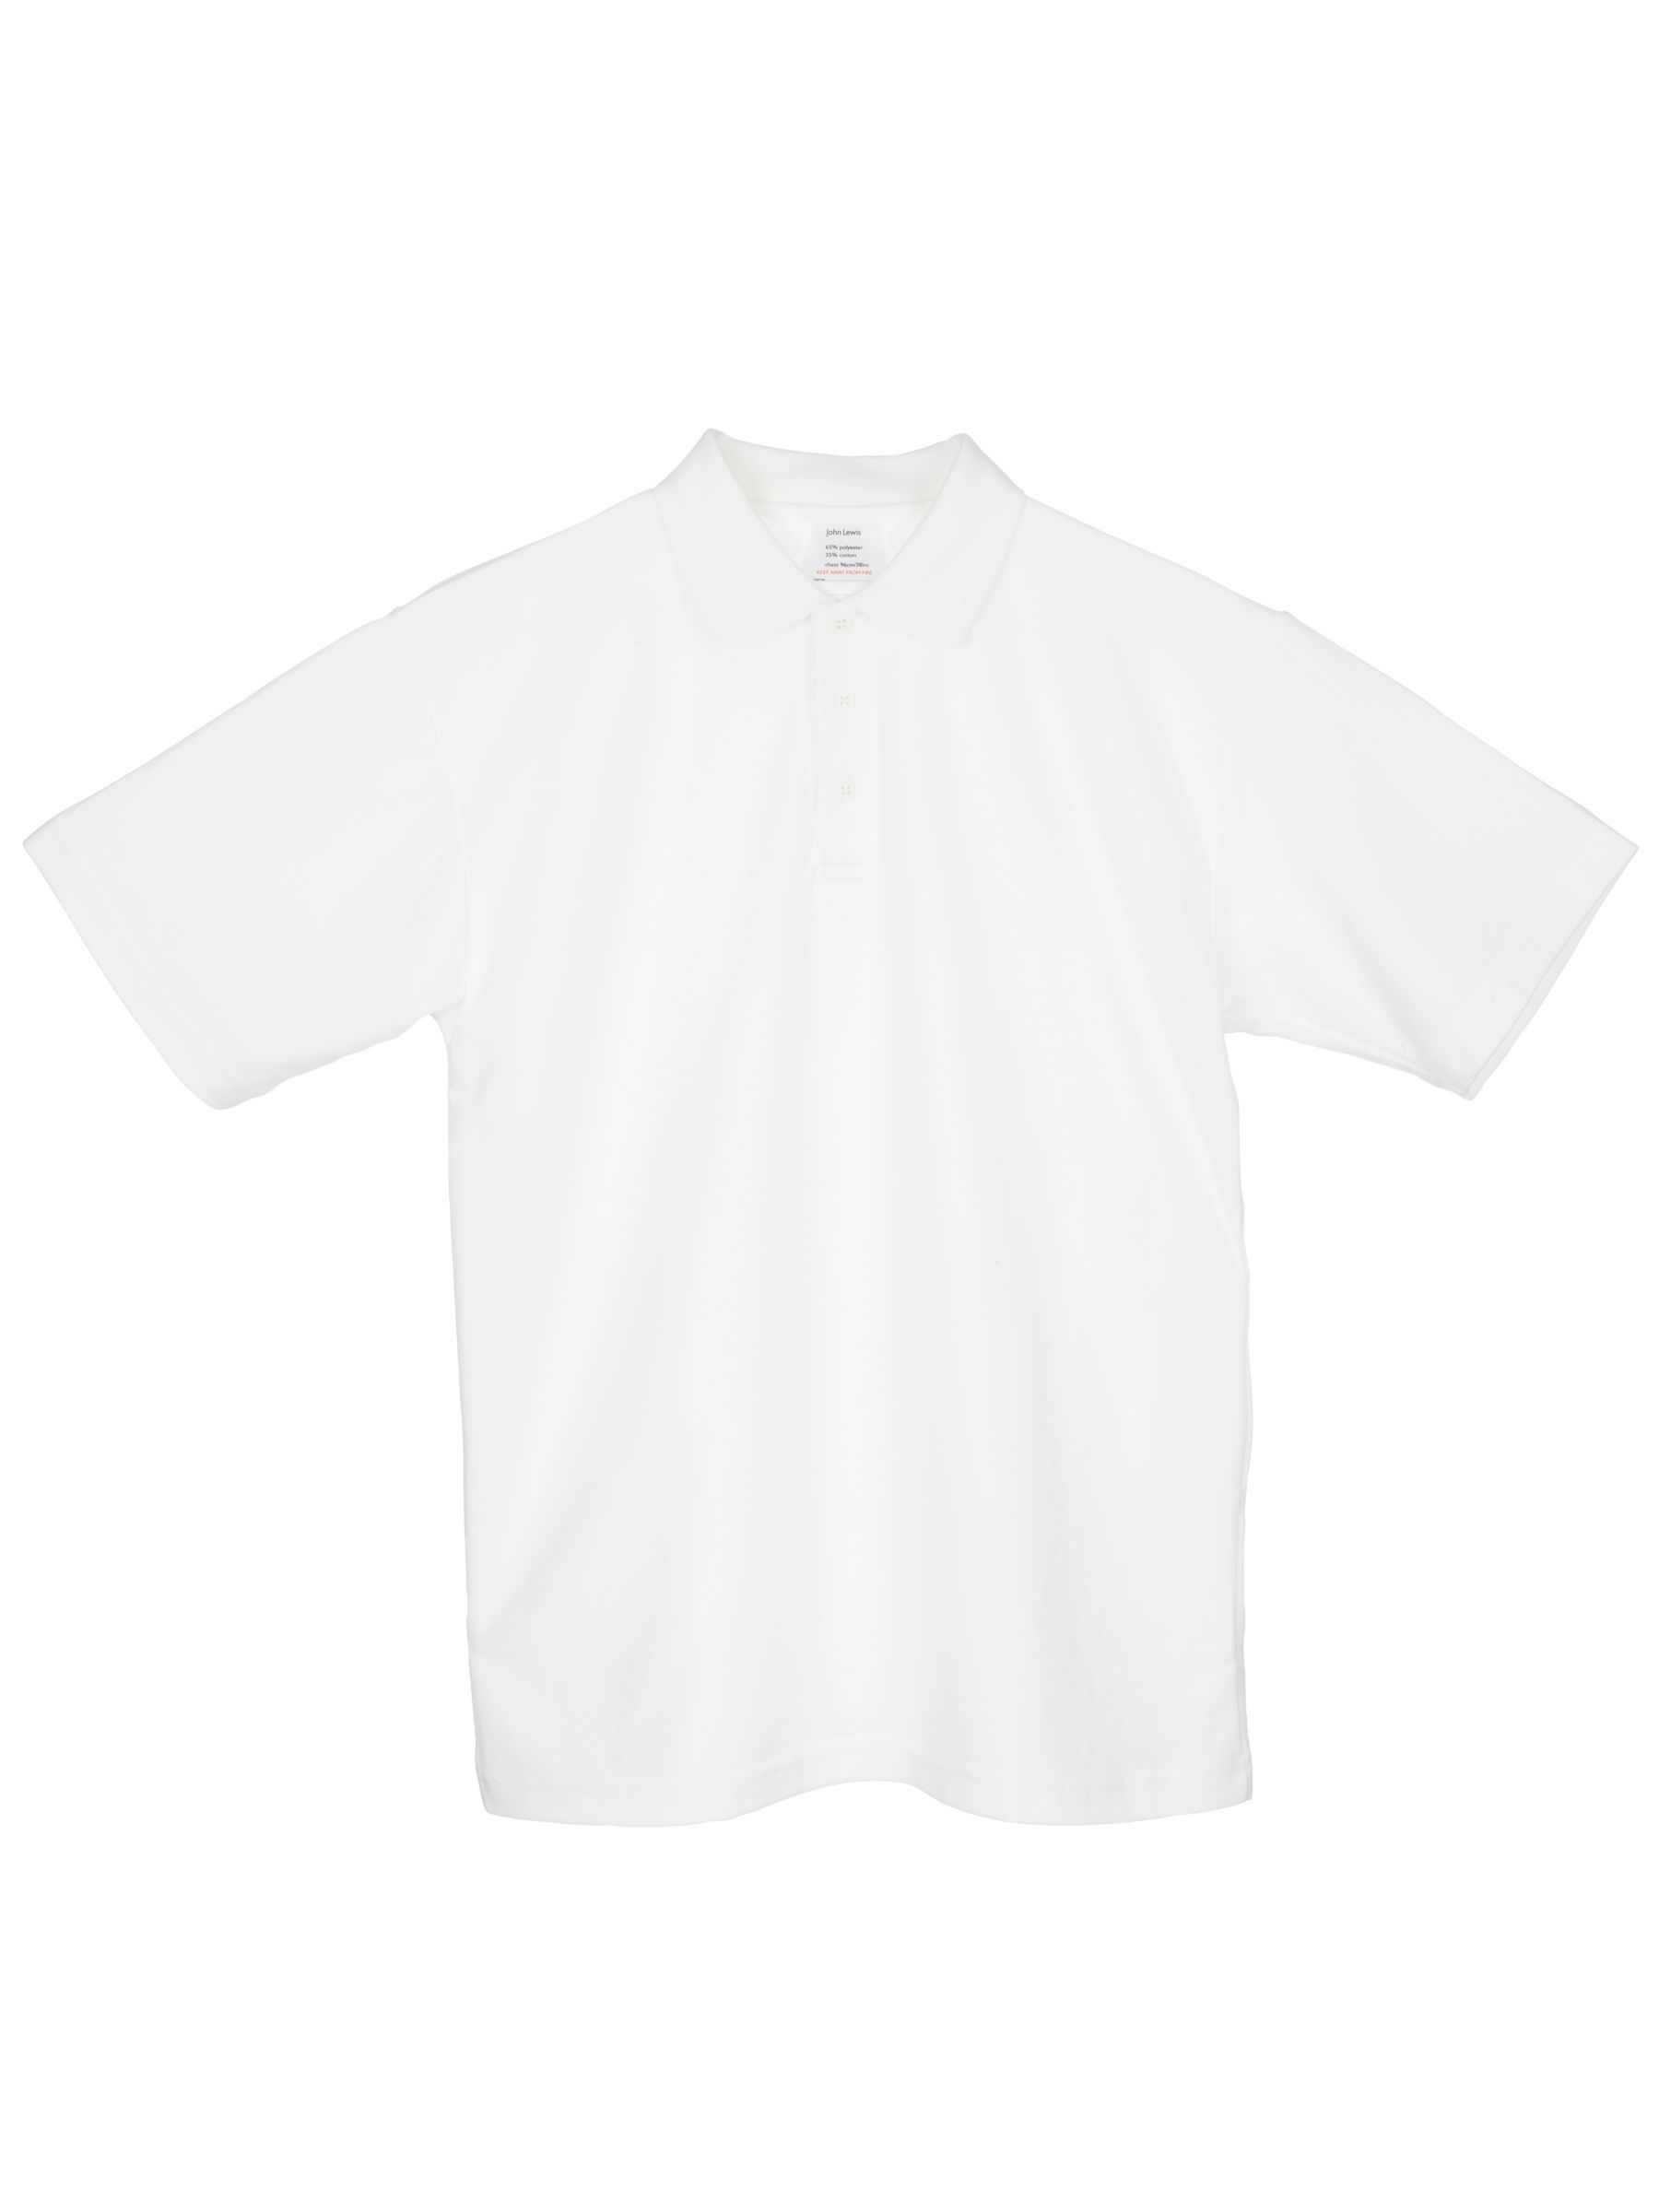 Unisex Polo Shirt, White, Chest 30 (76cm), Pack of 2